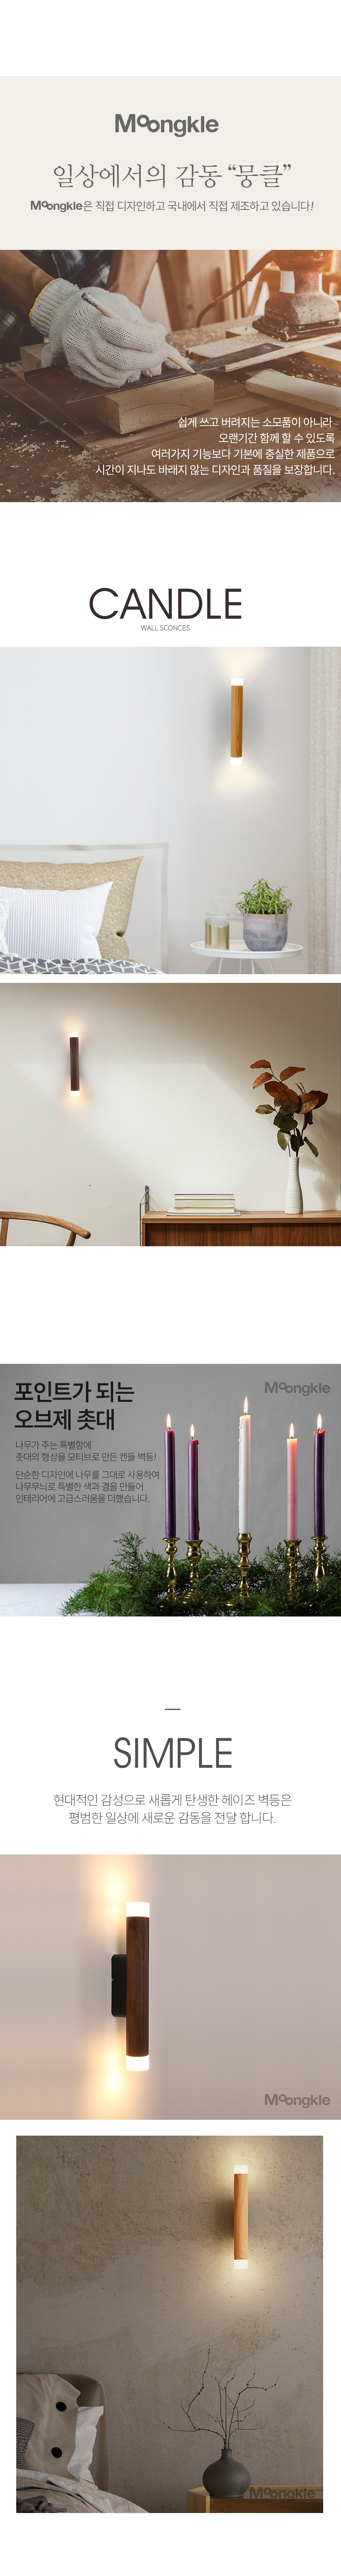 candle-wall-lamp-01_091213.jpg